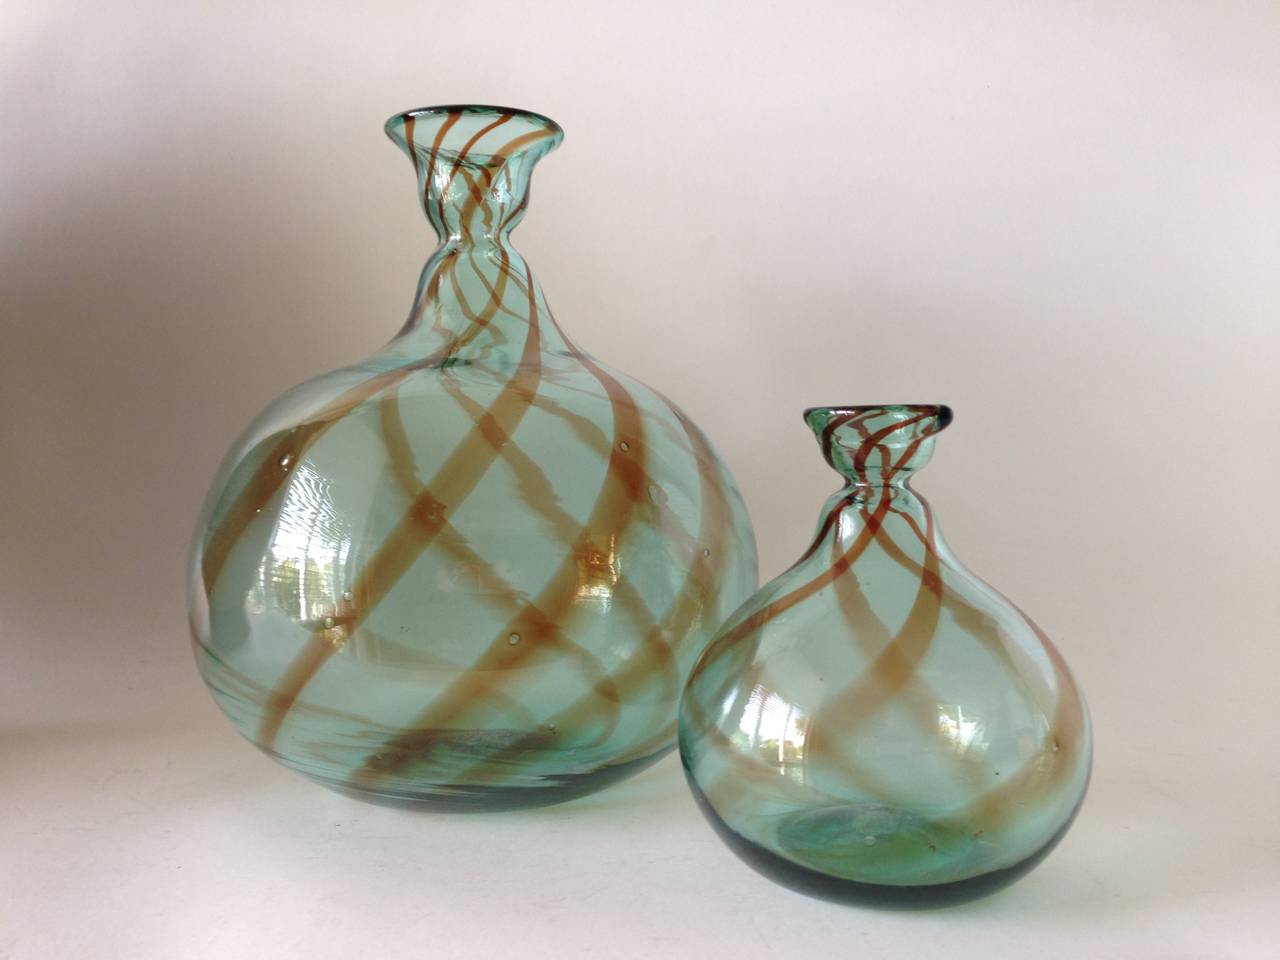 Two balloon vases designed by Donald Shepherd for Blenko, circa 1982. Large vase measures 11.5